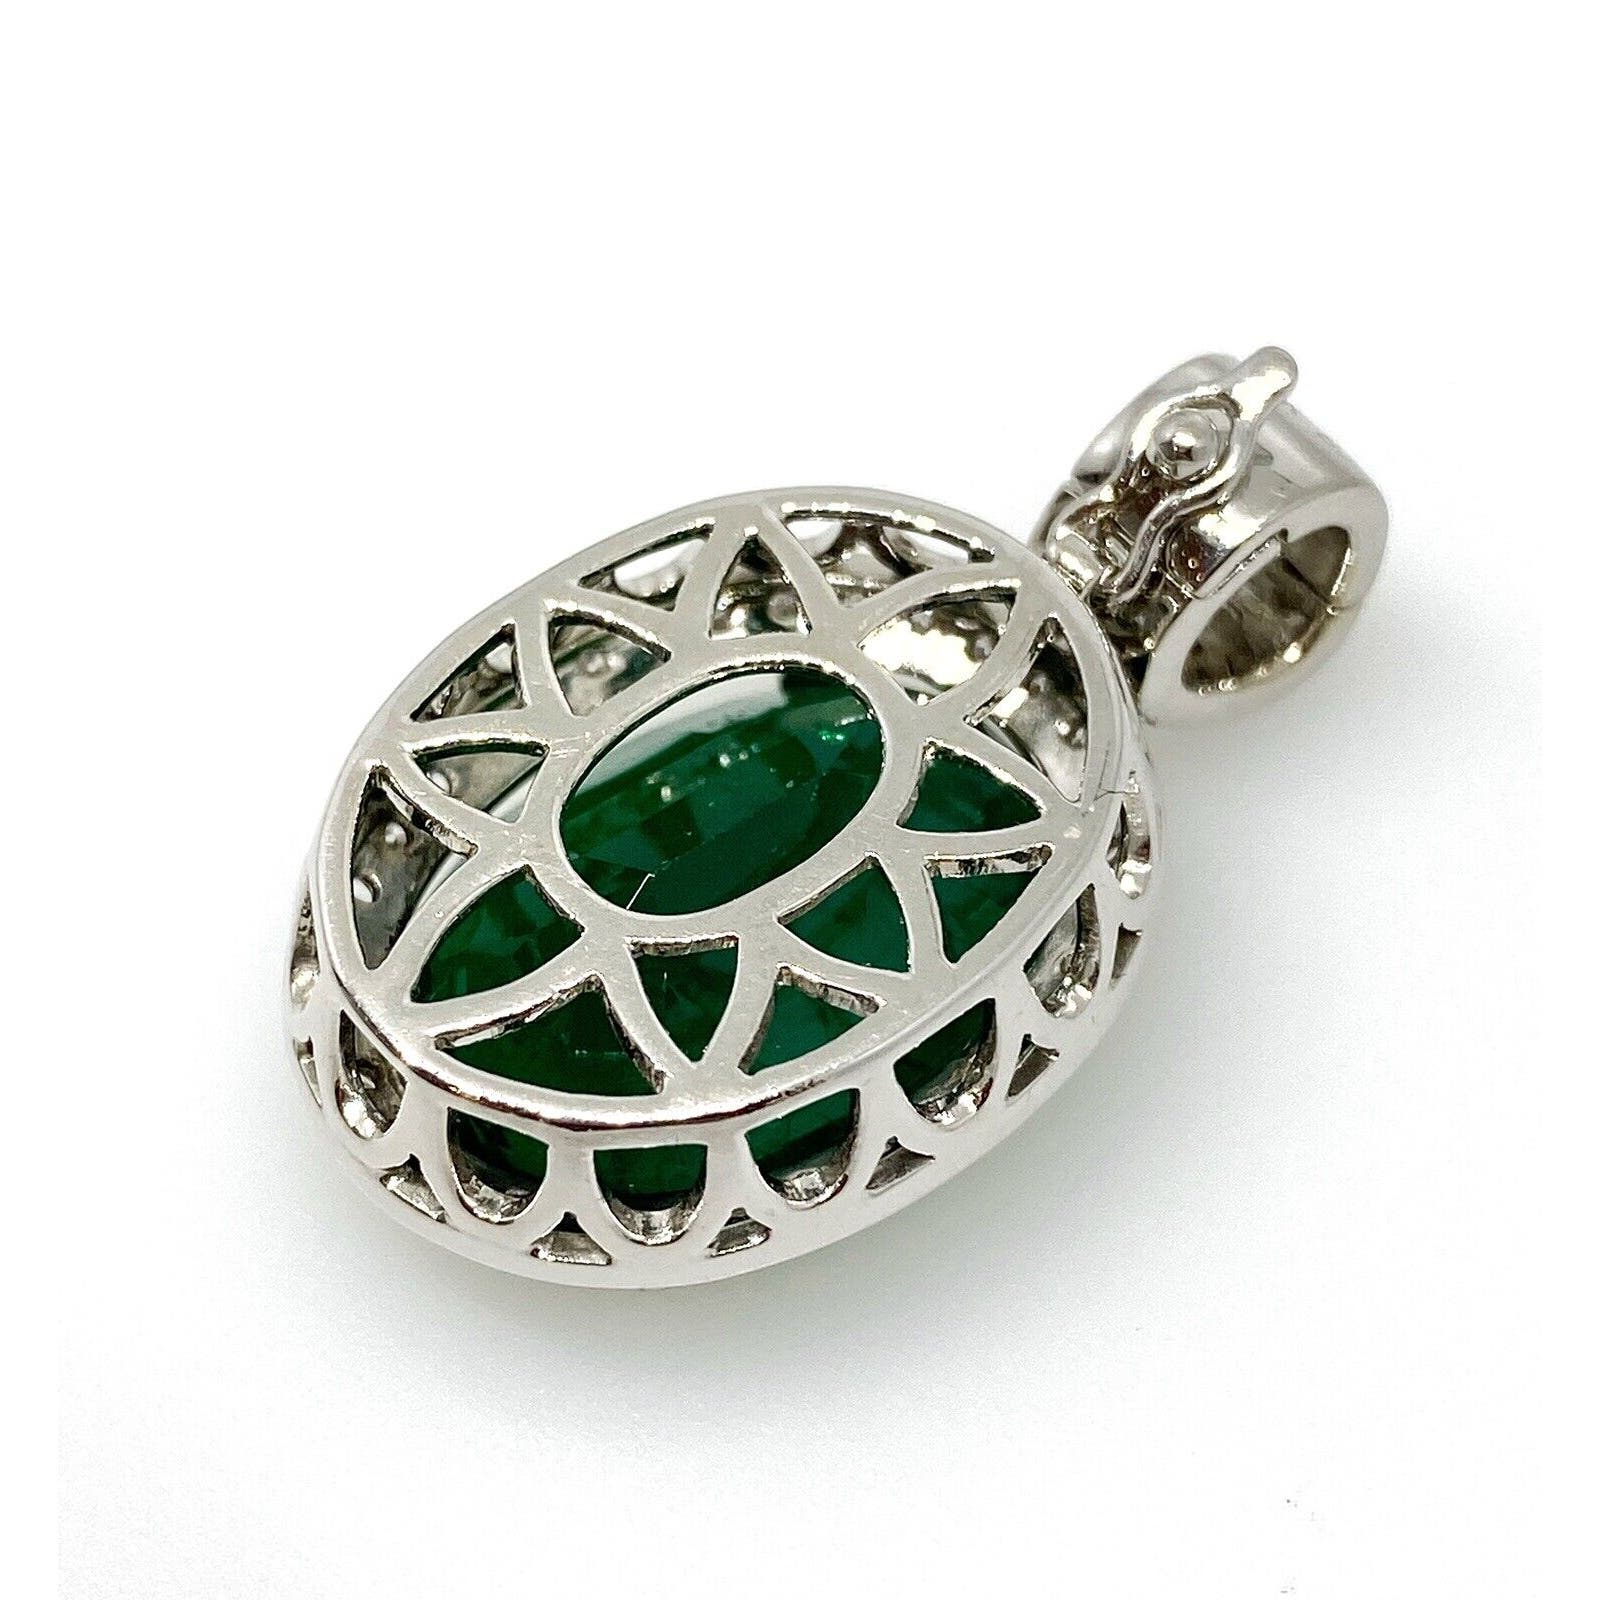 GIA Certified 11.76 ct Oval Emerald & Diamond Pendant in 18k White Gold-HM2316R5